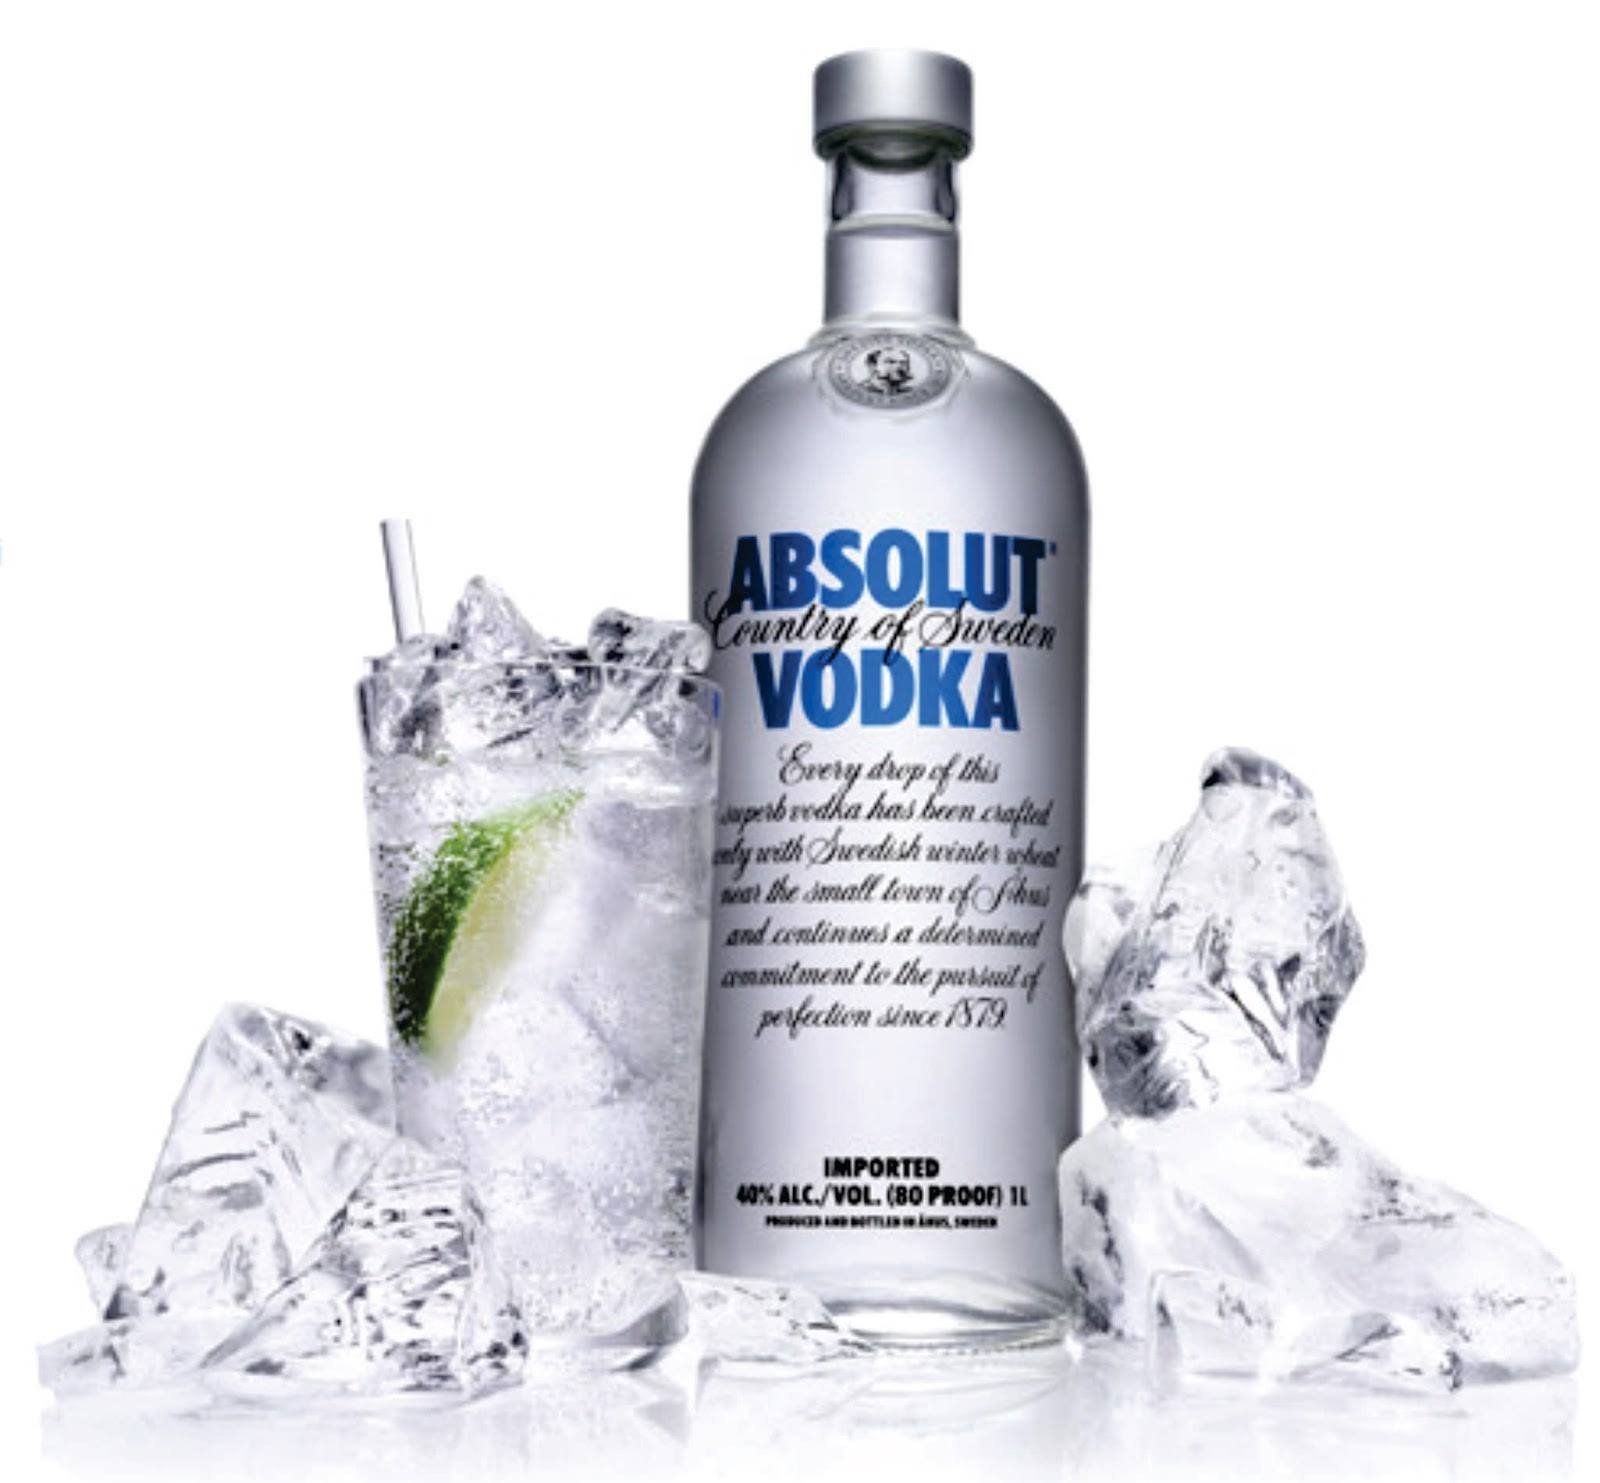 Top Wallpaper Vodka Absolut